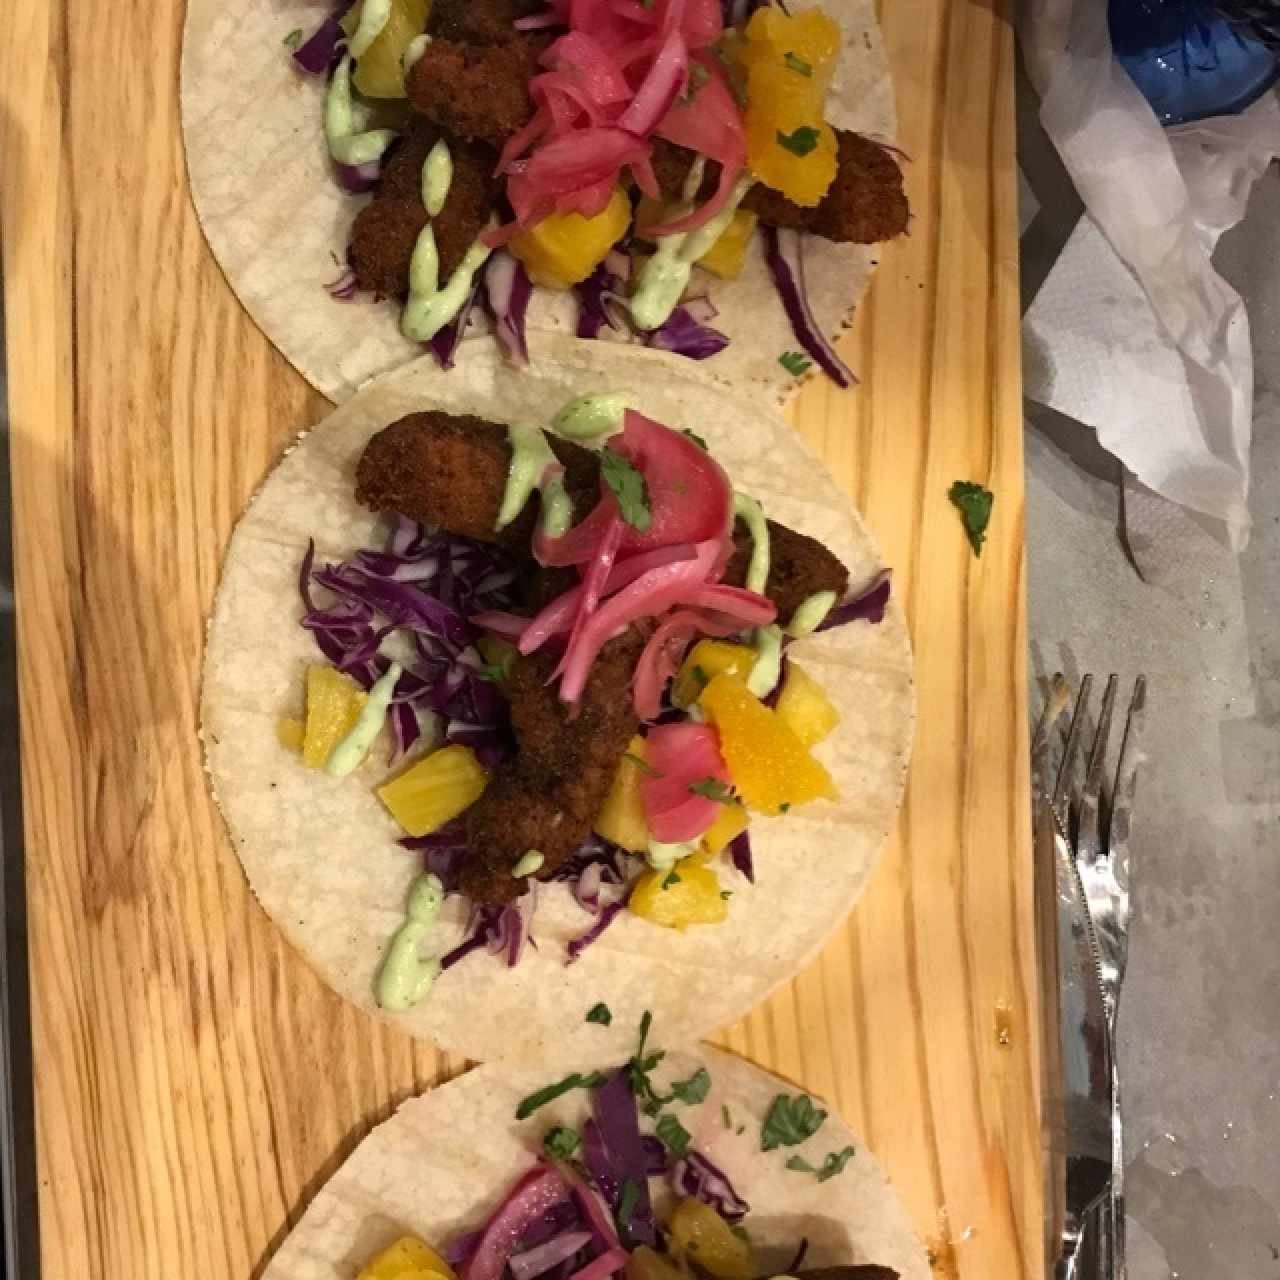 Fish Tacos